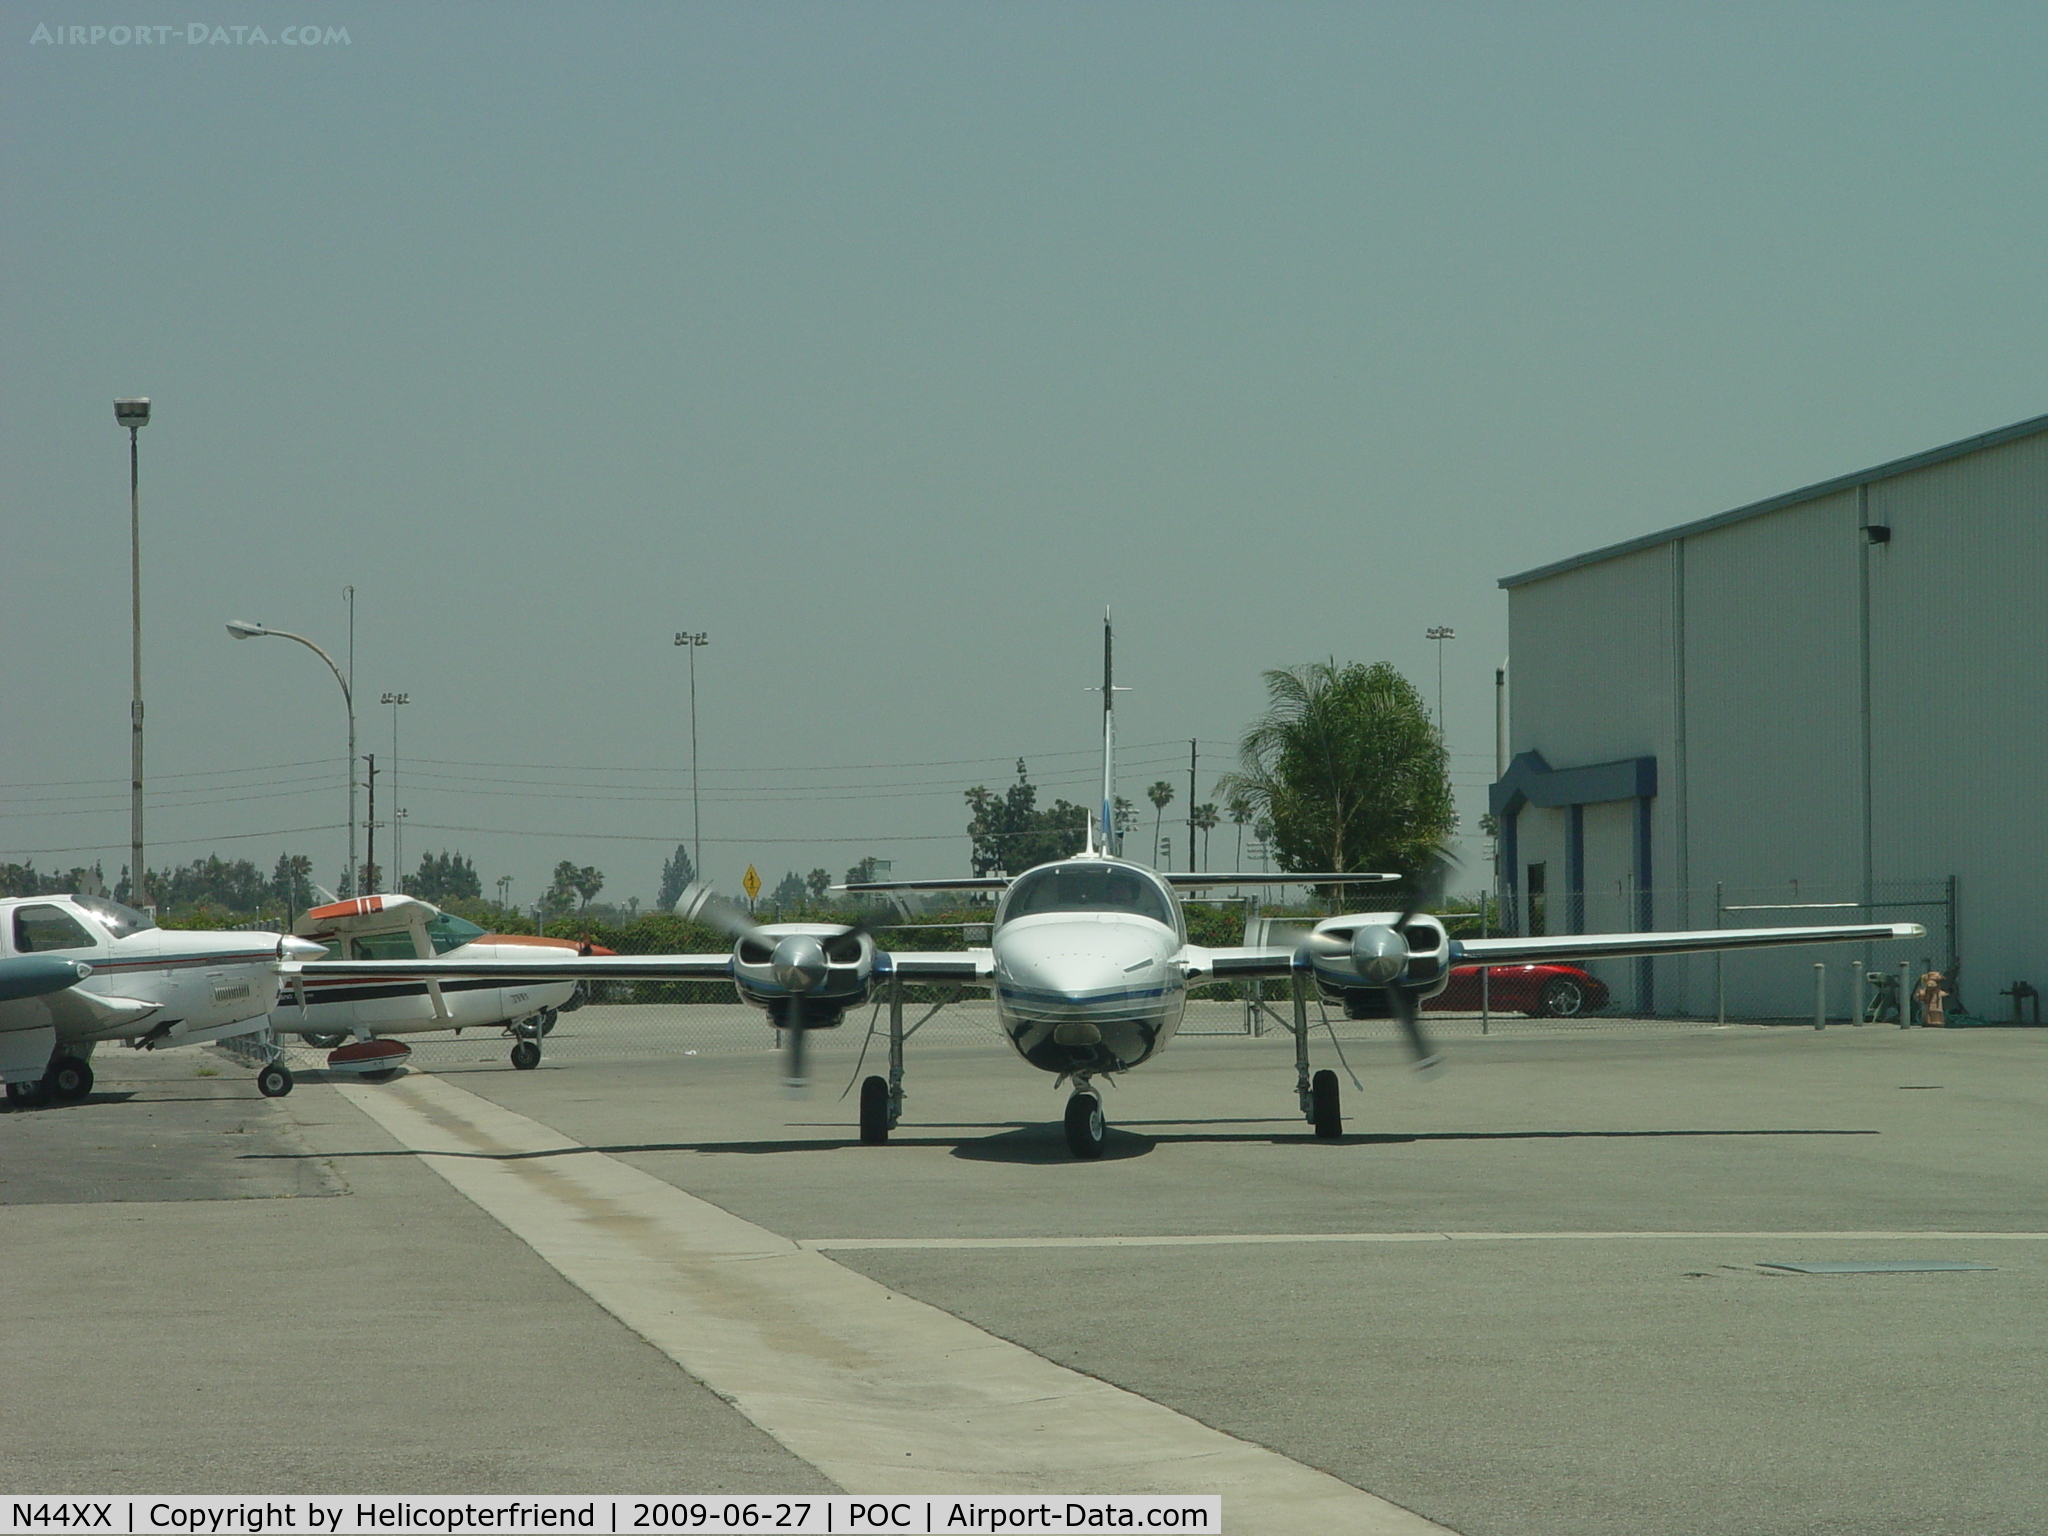 N44XX, 1979 Piper Aerostar 601P C/N 61P07398063362, Taxiing out behind N82XL headed to runway 26L